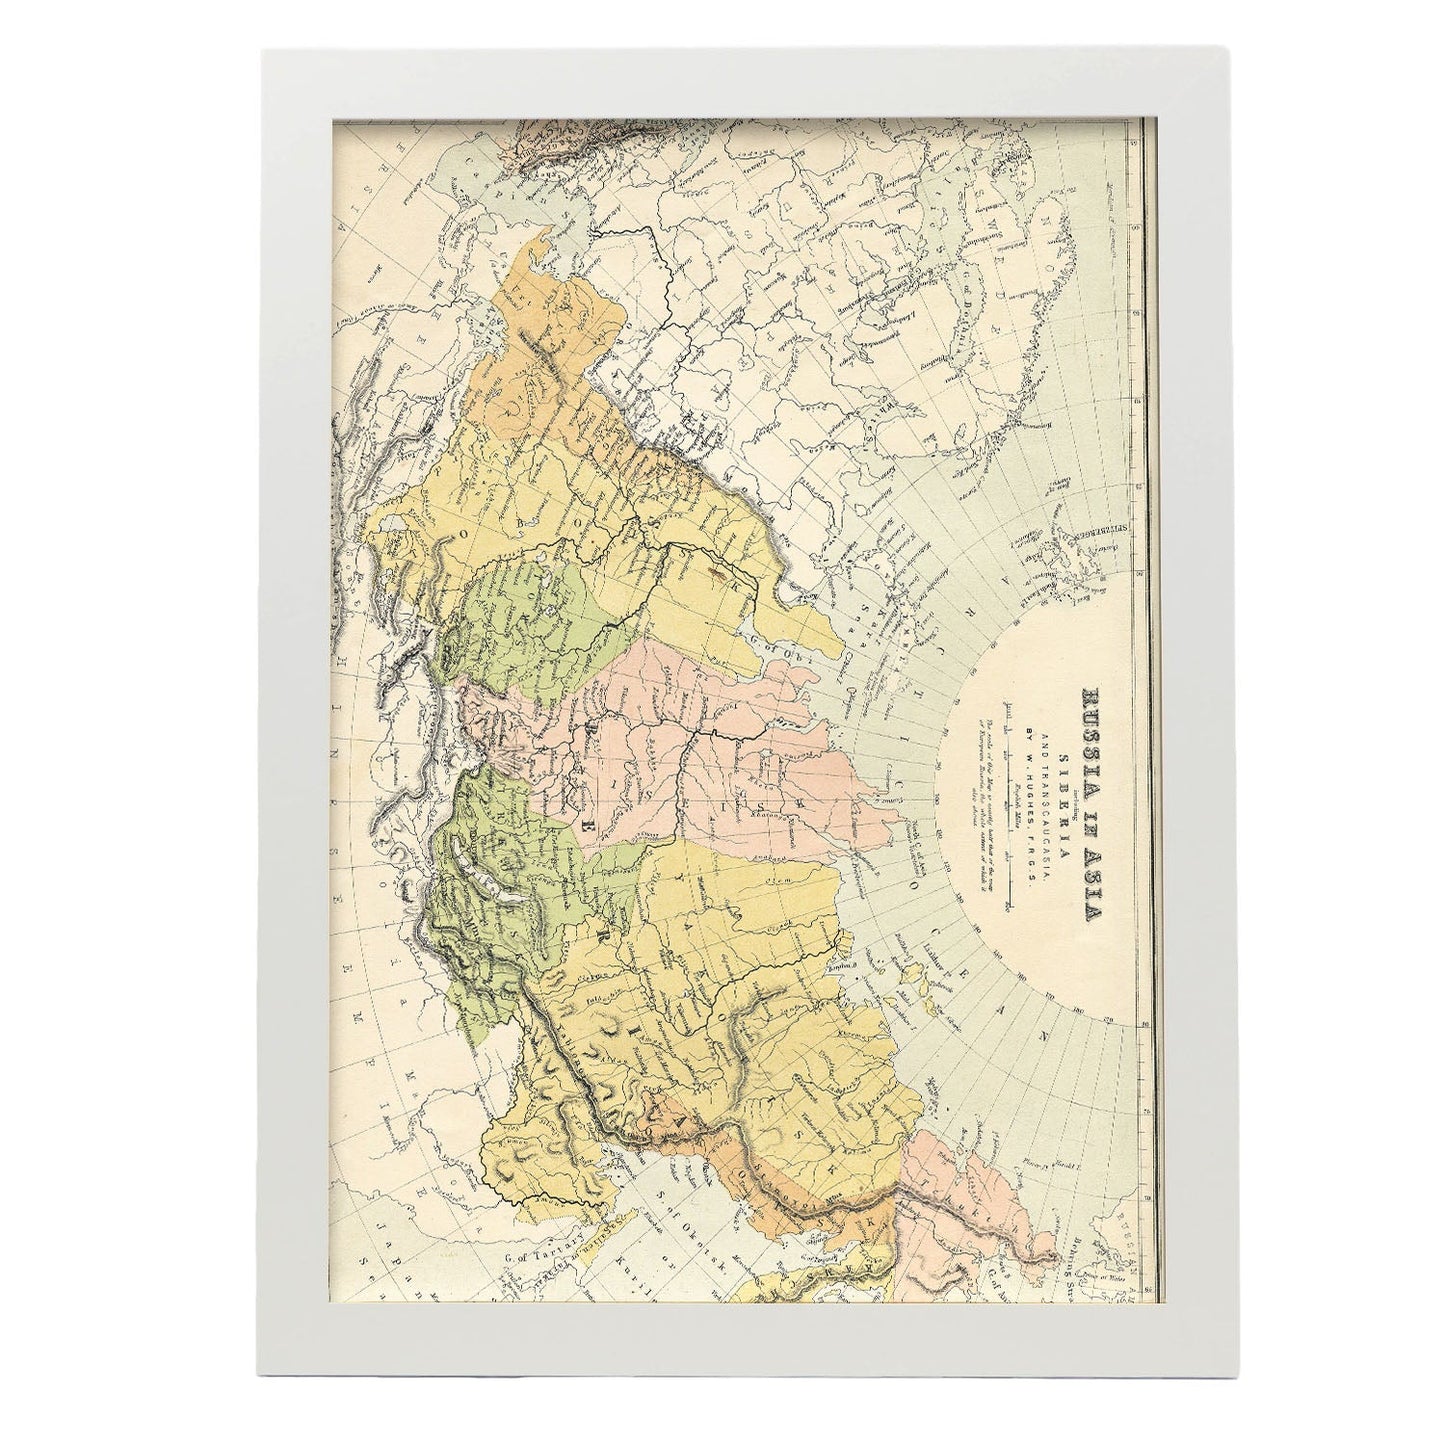 Vintage-map-of-Russia-in-Europe-Artwork-Nacnic-A3-Marco Blanco-Nacnic Estudio SL